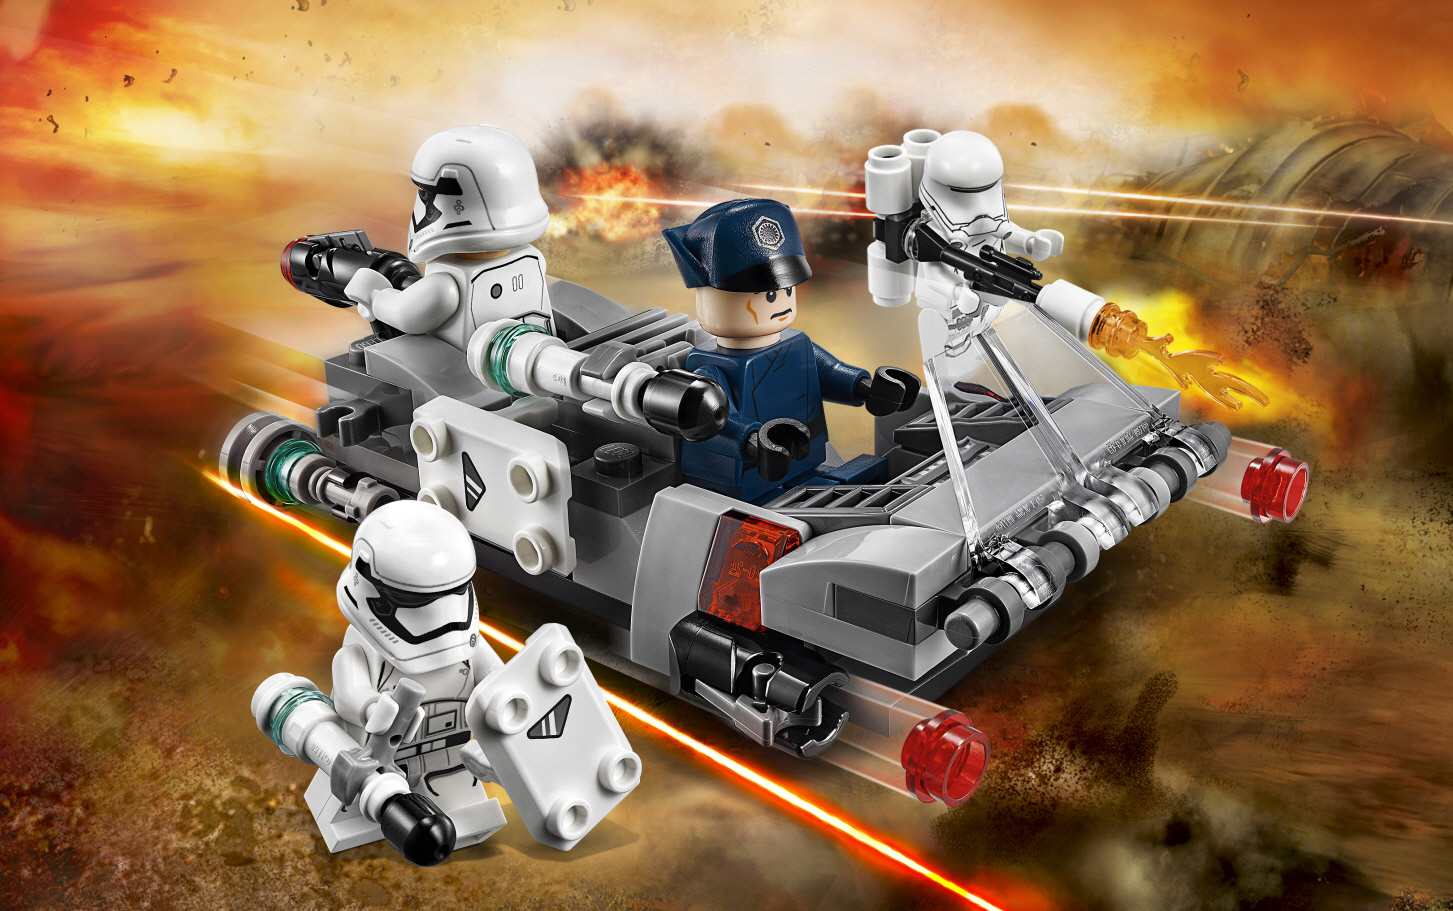 LEGO Star Wars 75166 First Order Transport Speeder Battle Pack